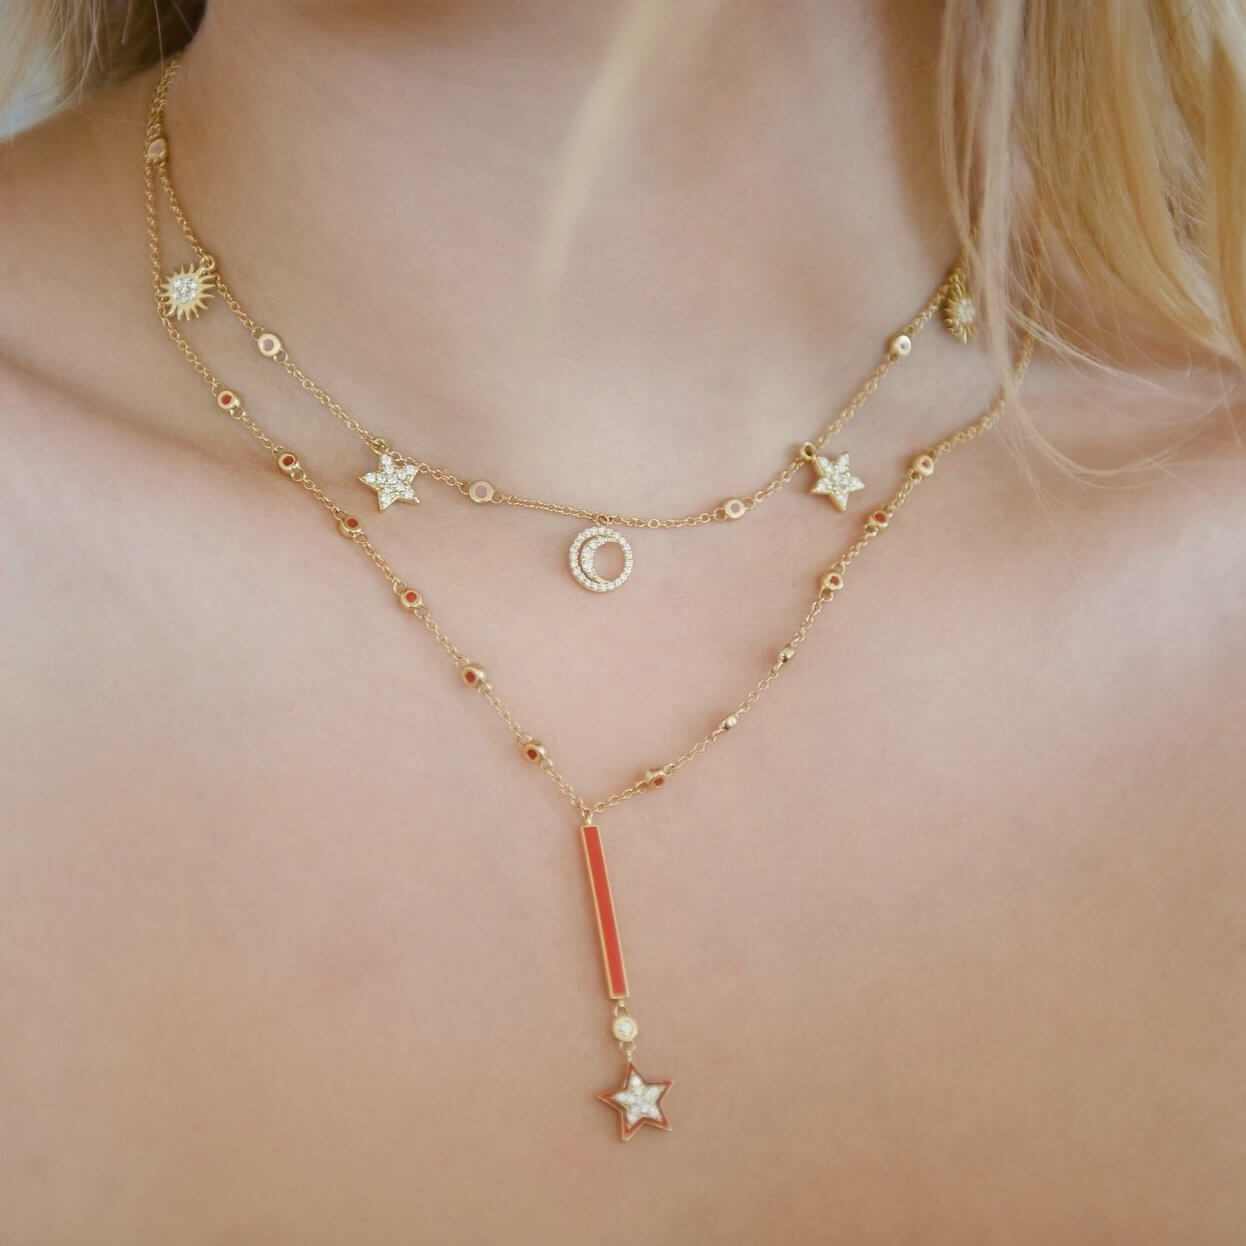 Gold Star Choker Necklace - 14K Gold Filled Star Pendant - Golden Star -  Nadin Art Design - Personalized Jewelry